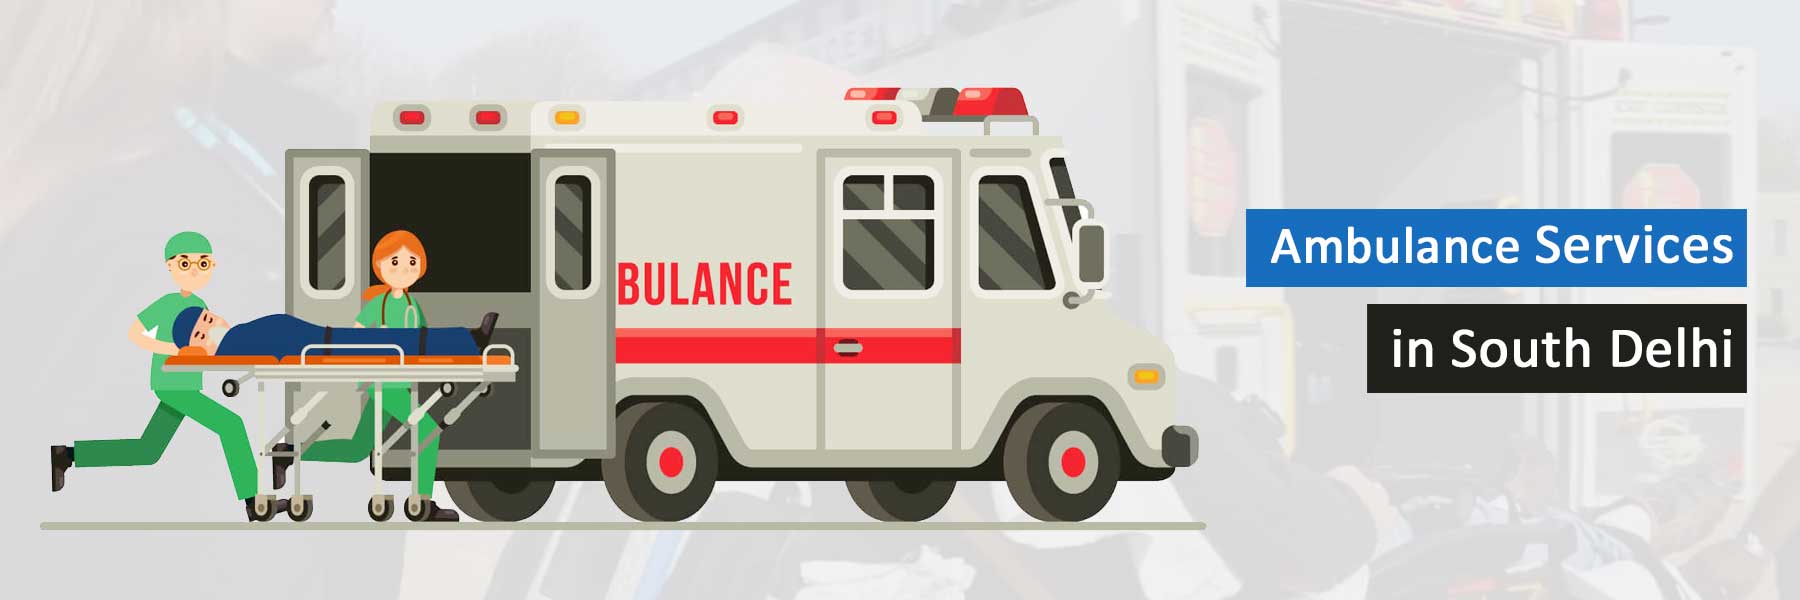 Ambulance Services in South Delhi